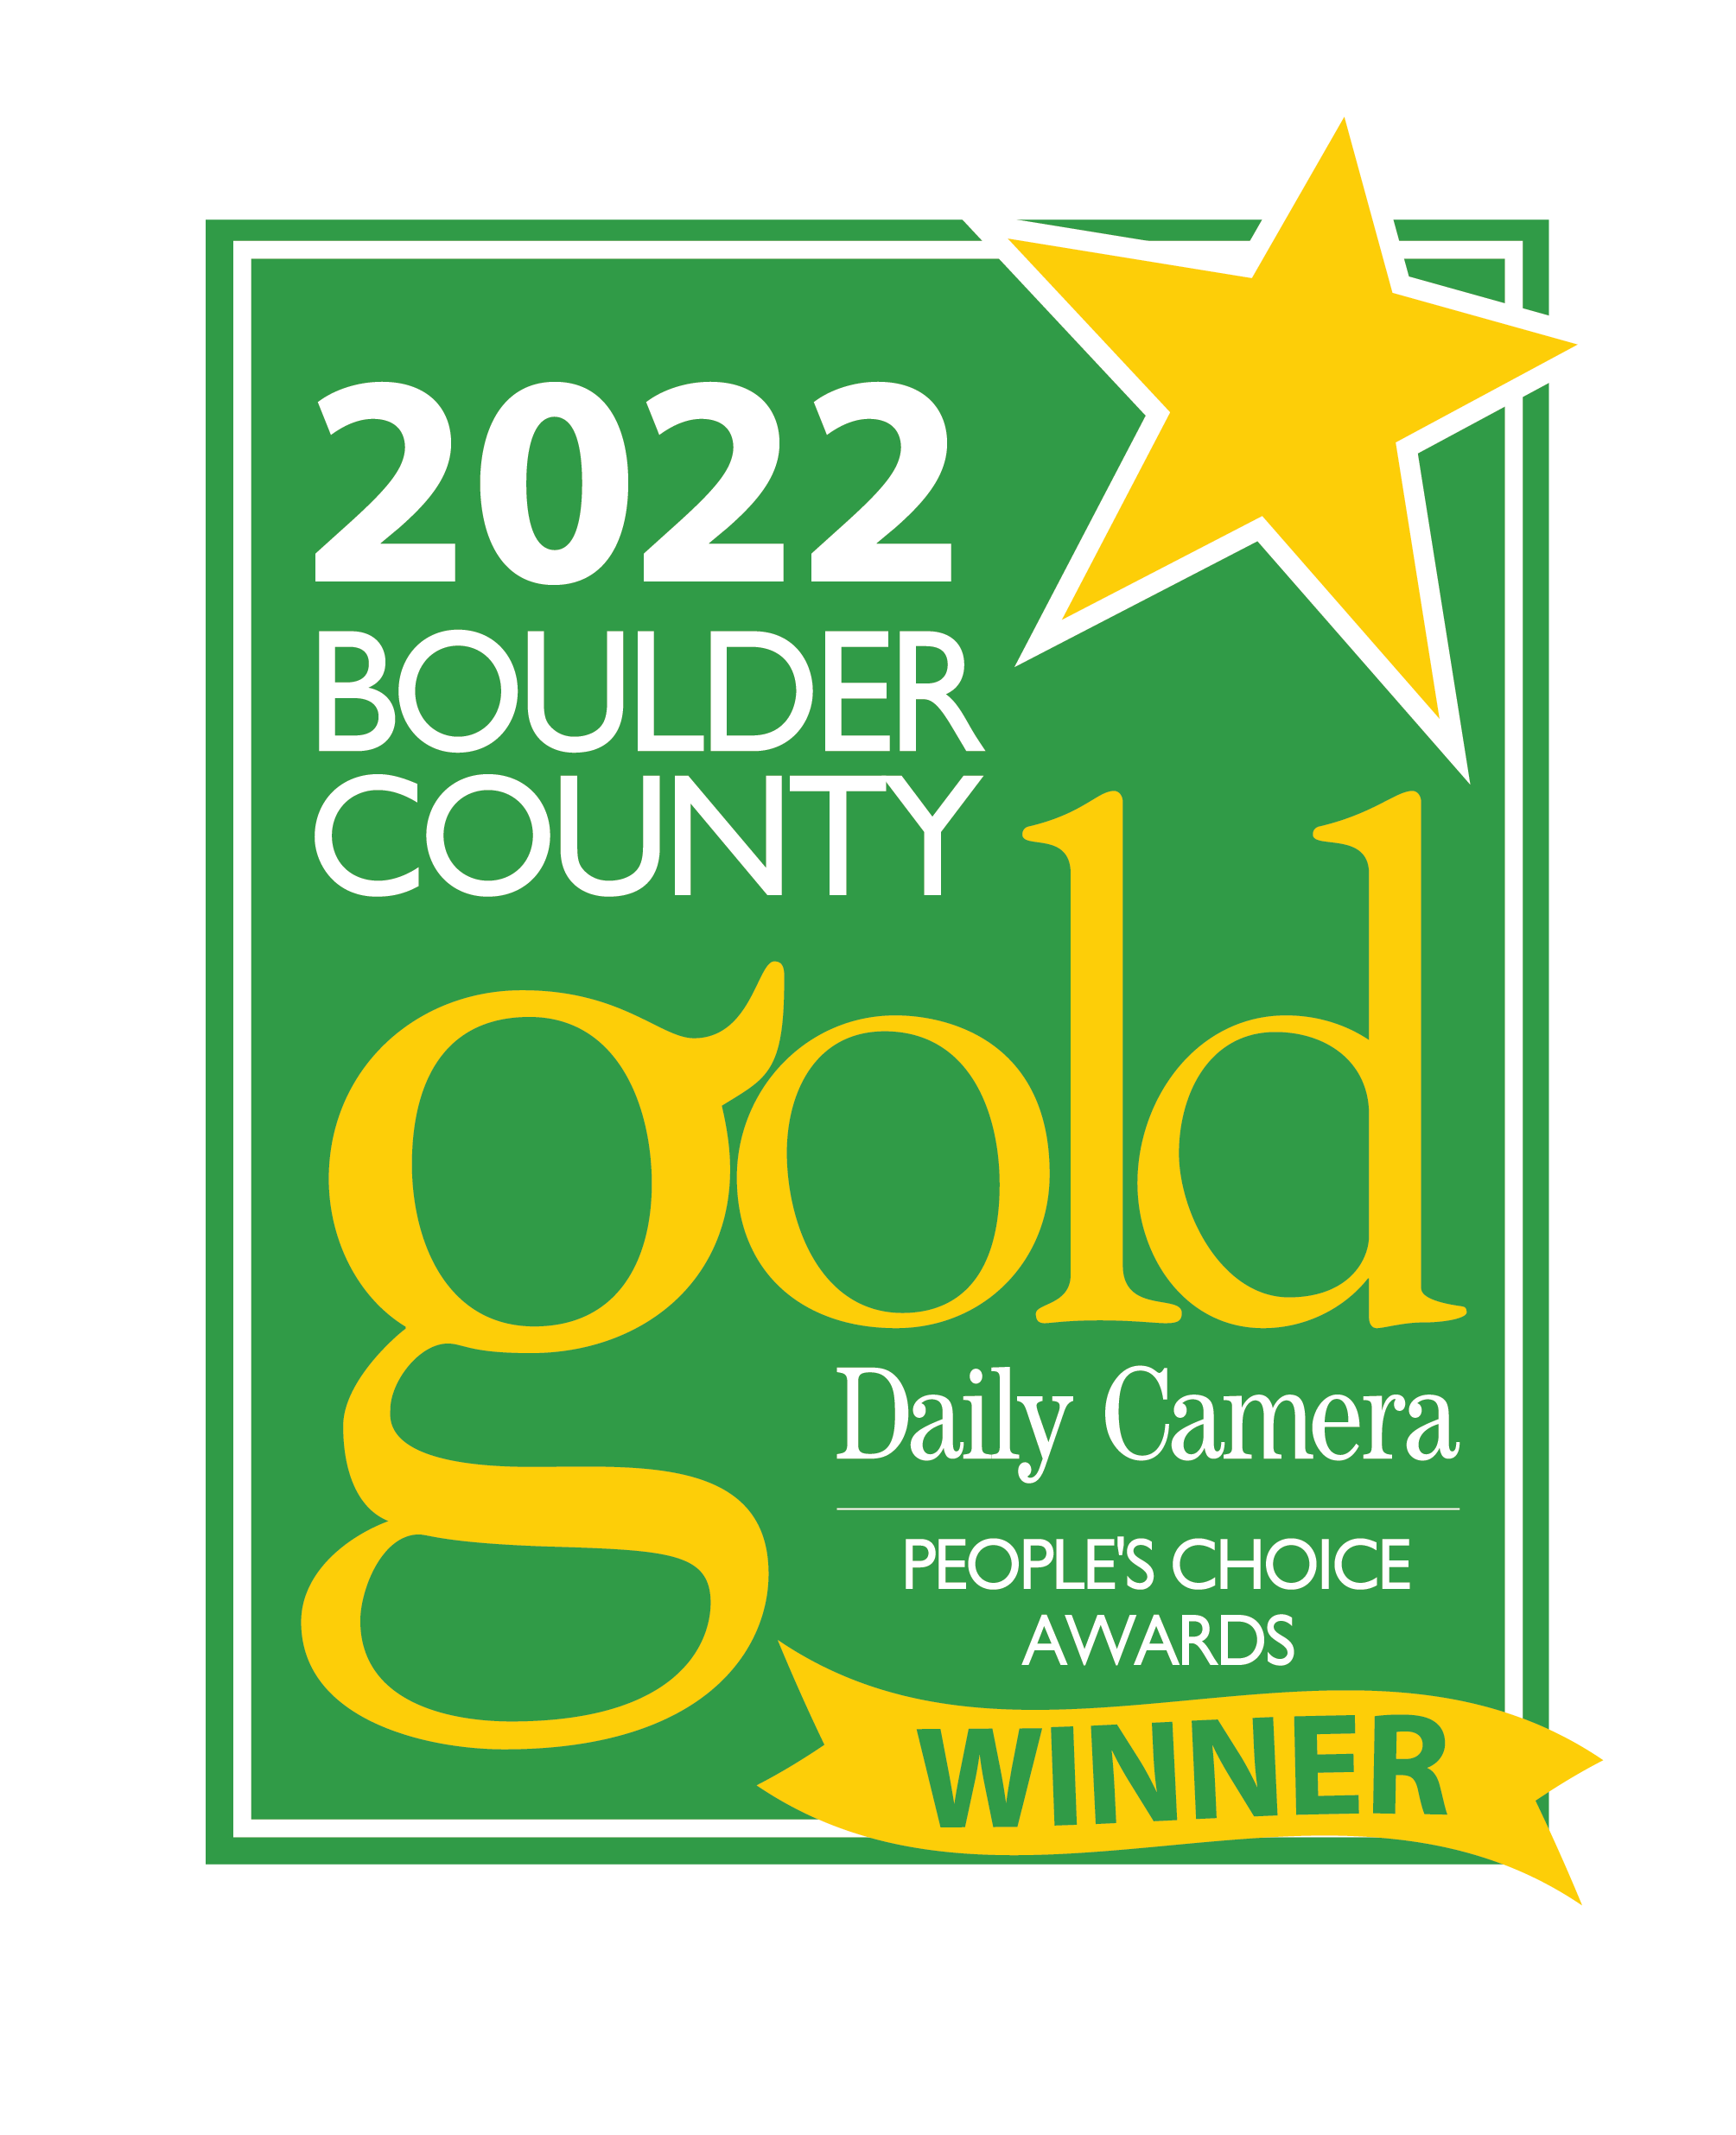 Daily Camera: 2021 Boulder County Gold